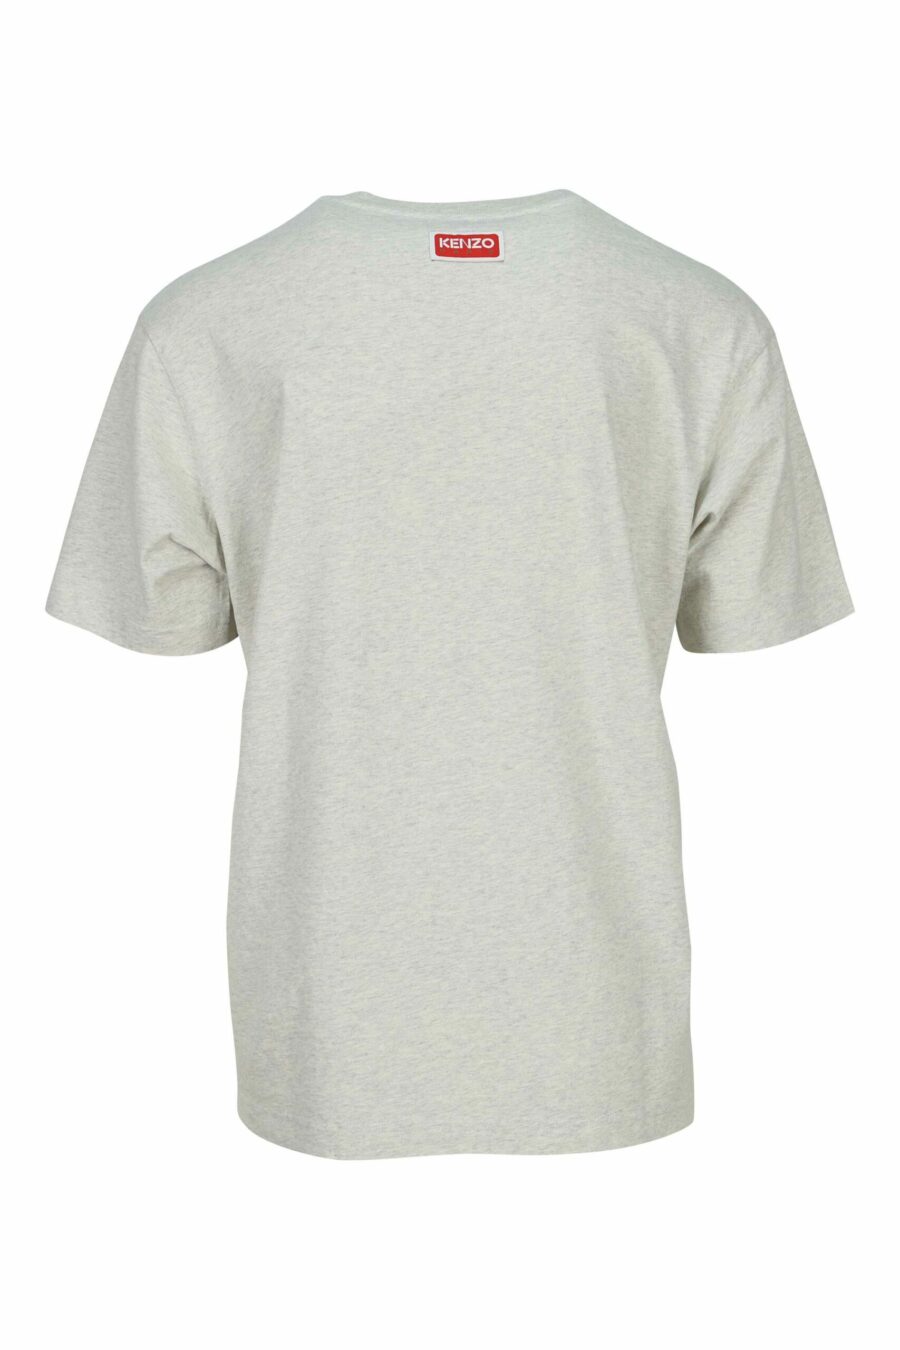 T-shirt cinzenta com maxilogo de tigre - 3612230627857 1 à escala